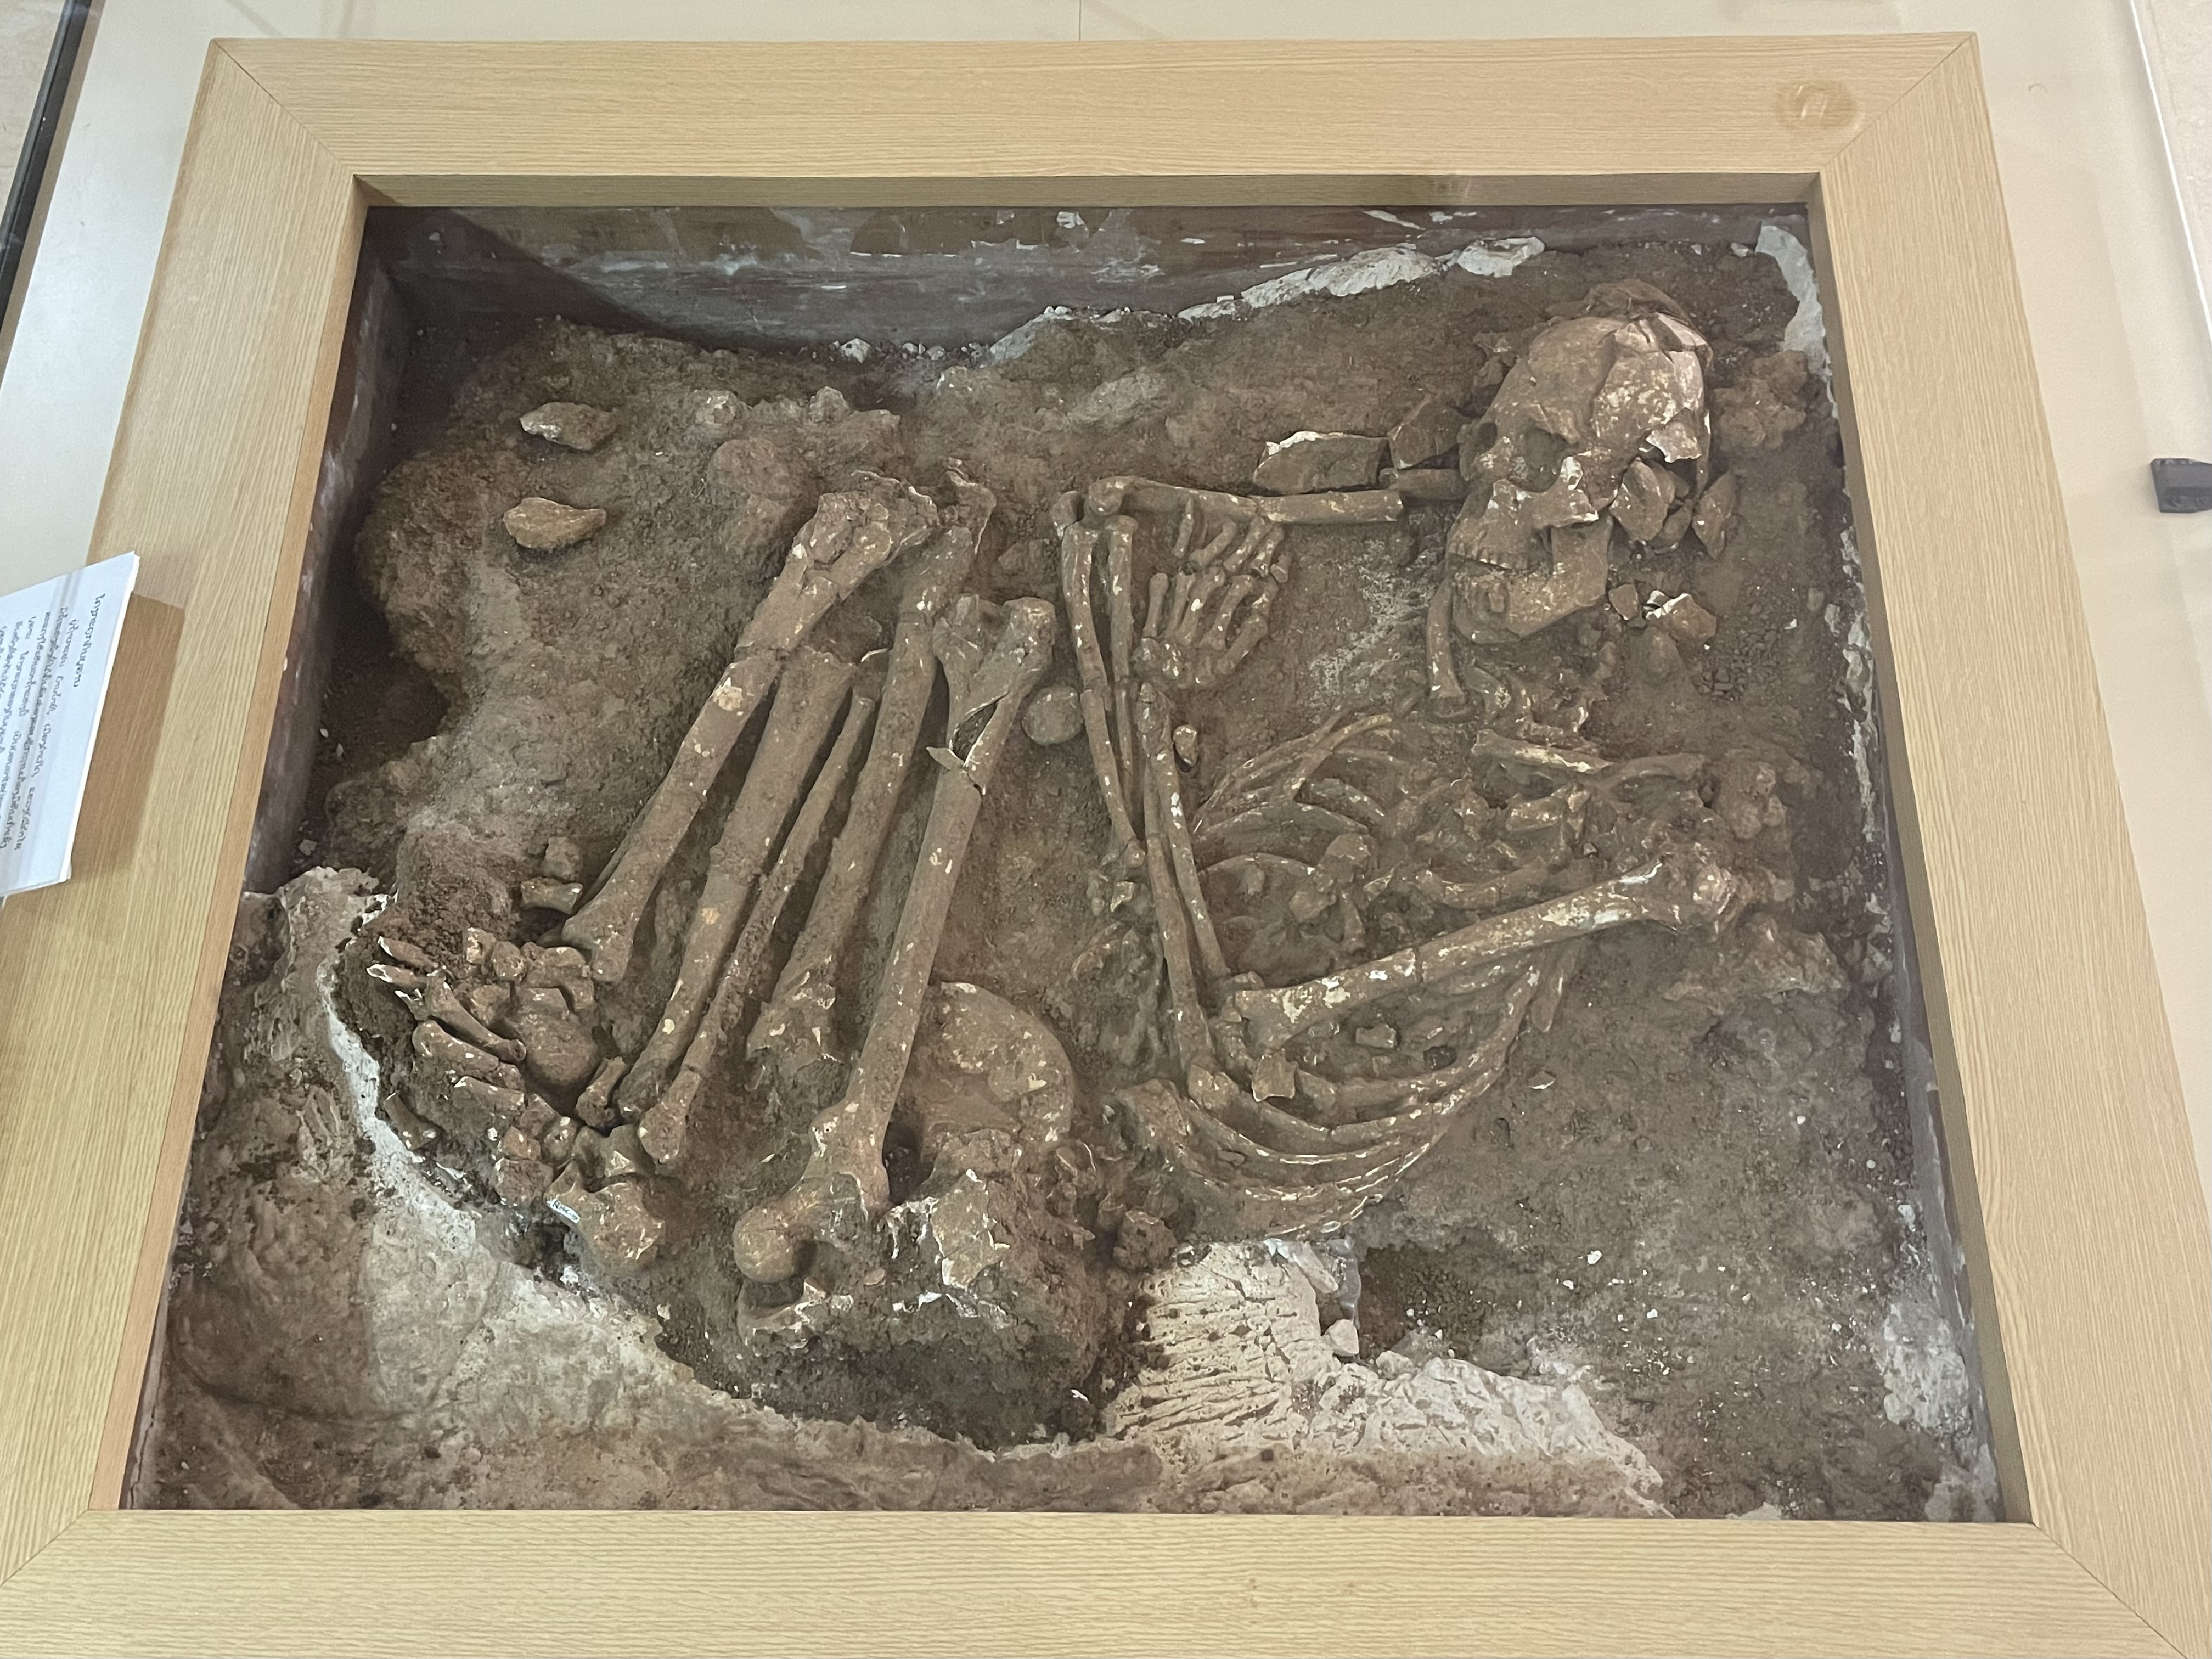 Buried human bones